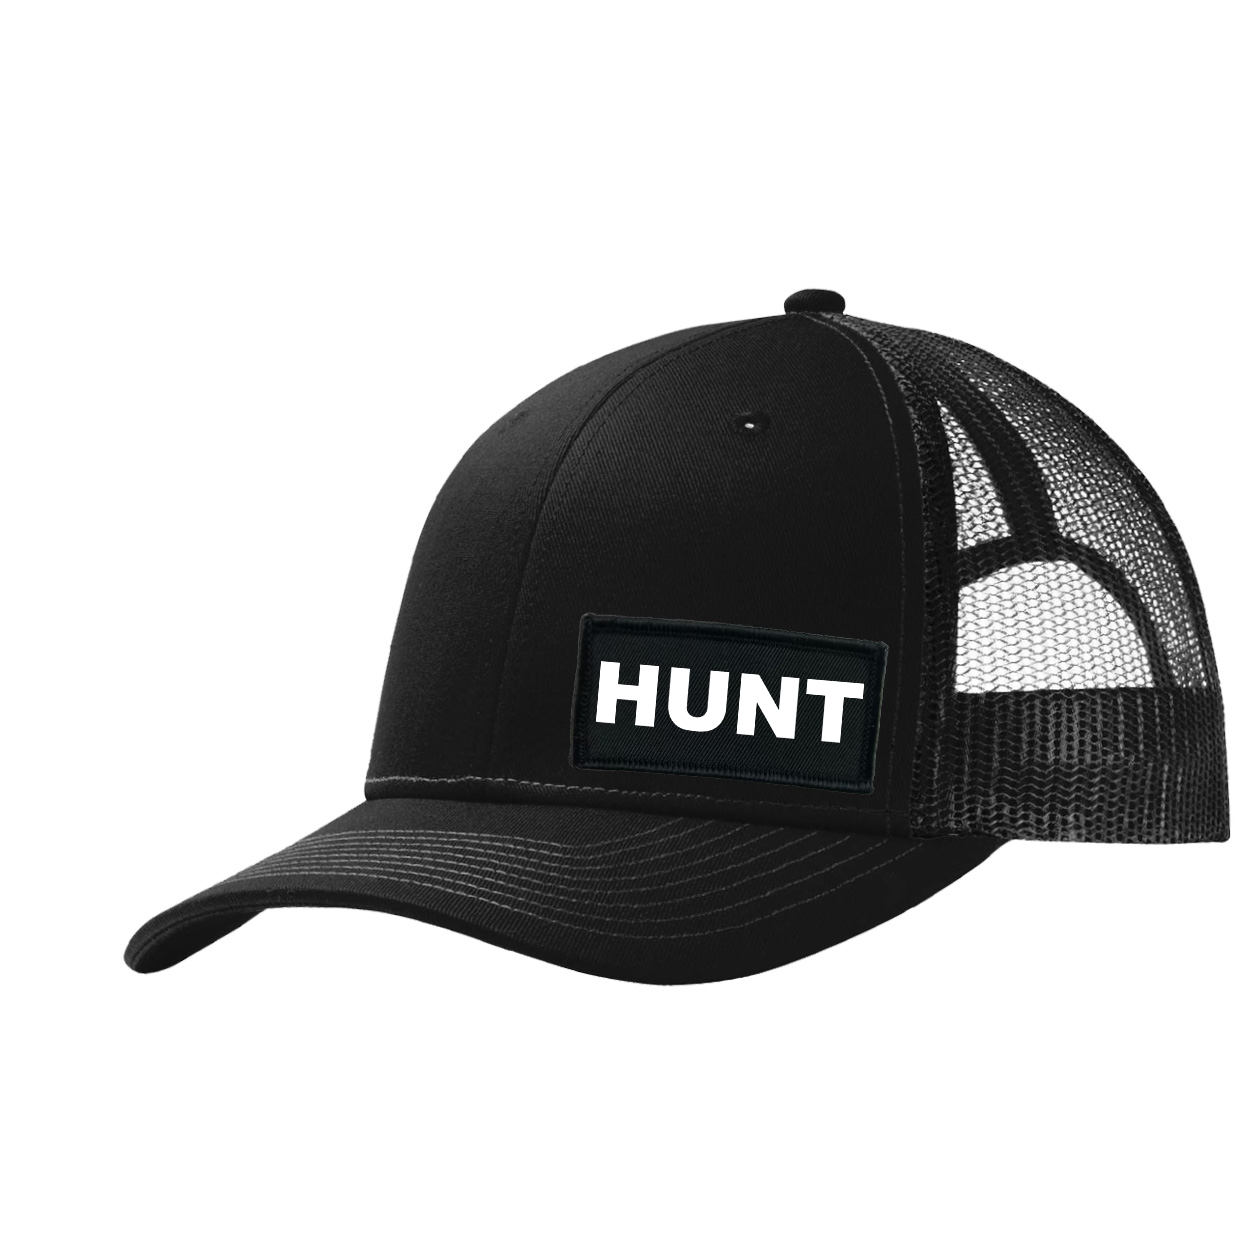 Hunt Brand Logo Night Out Woven Patch Snapback Trucker Hat Black (White Logo)